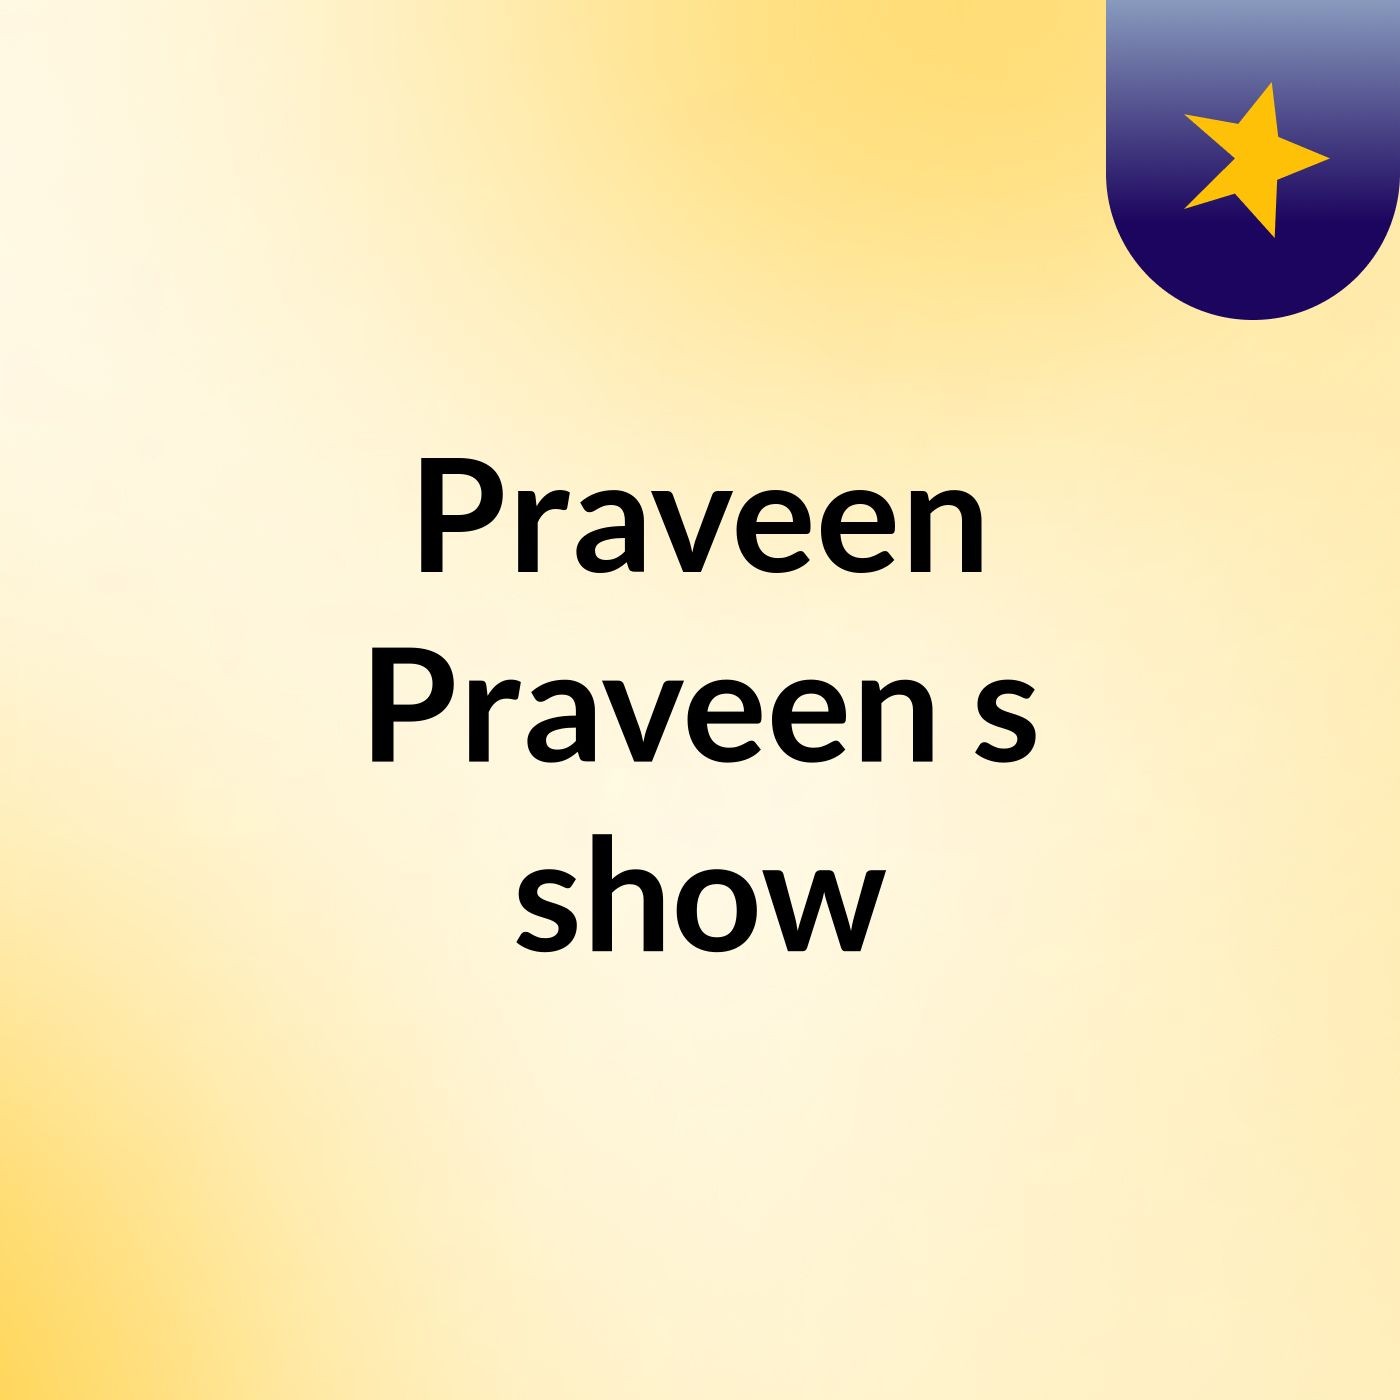 Episode 3 - Praveen Praveen's show